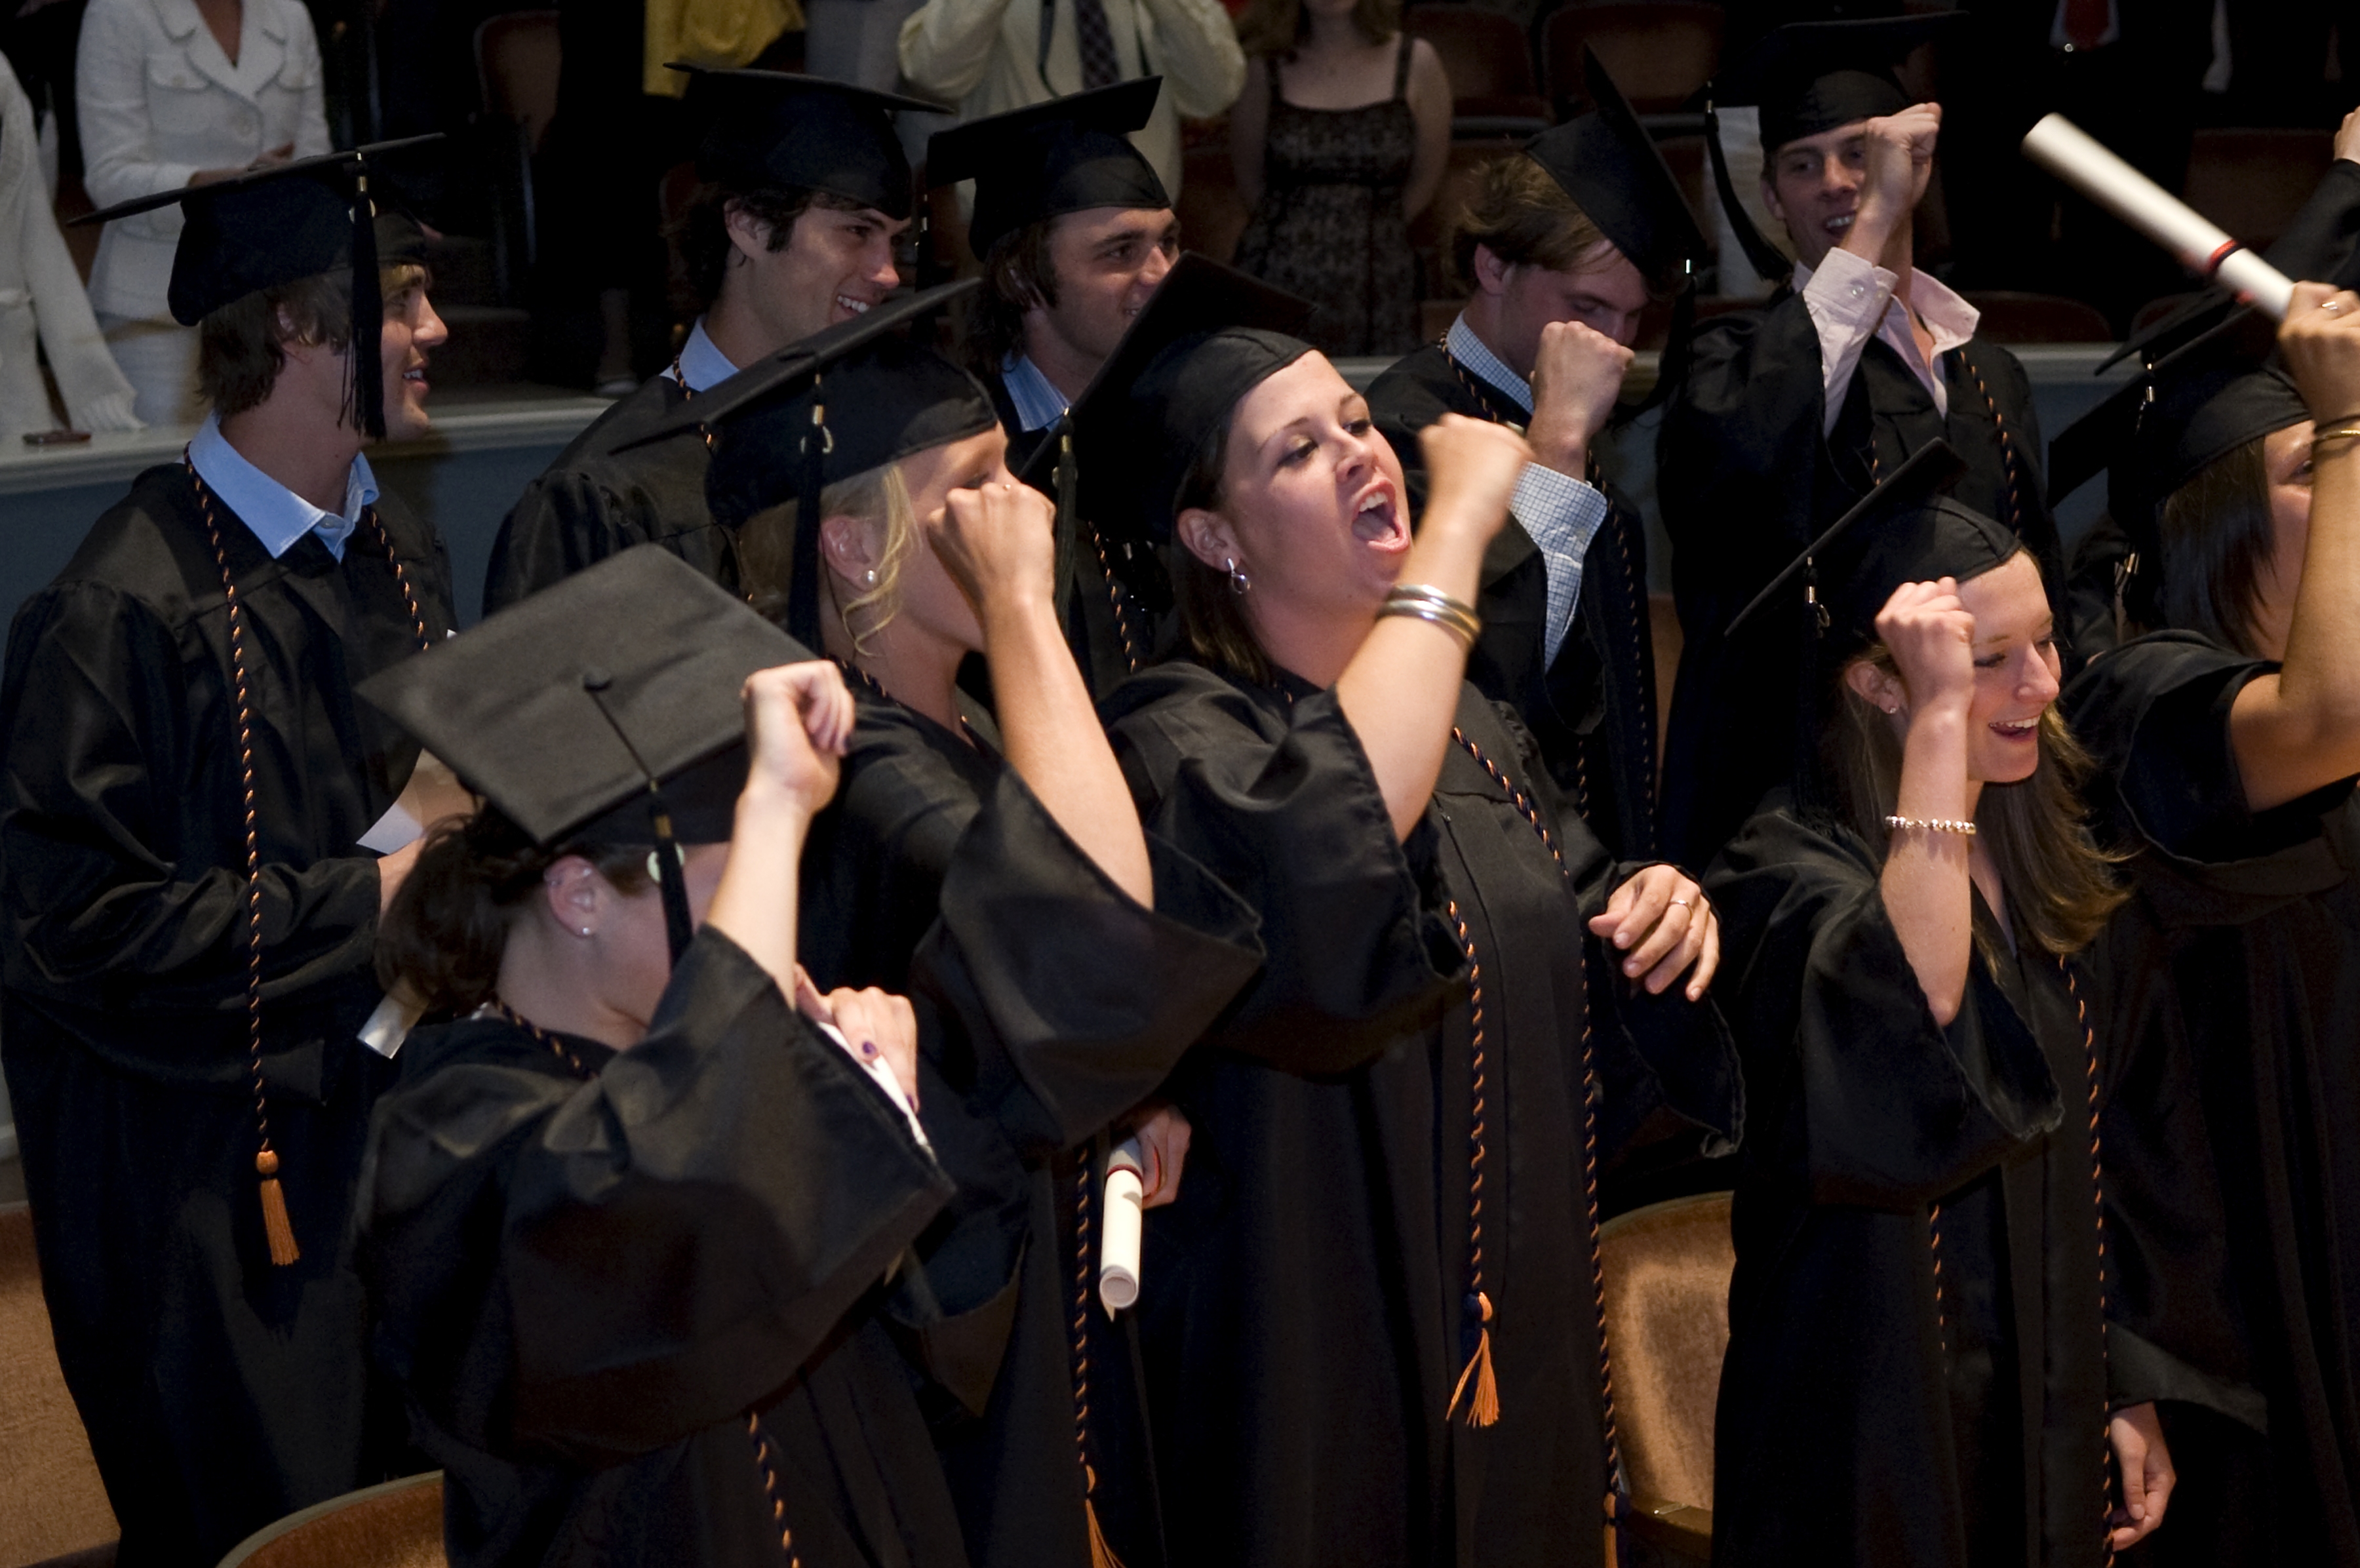 Graduates singing and cheering